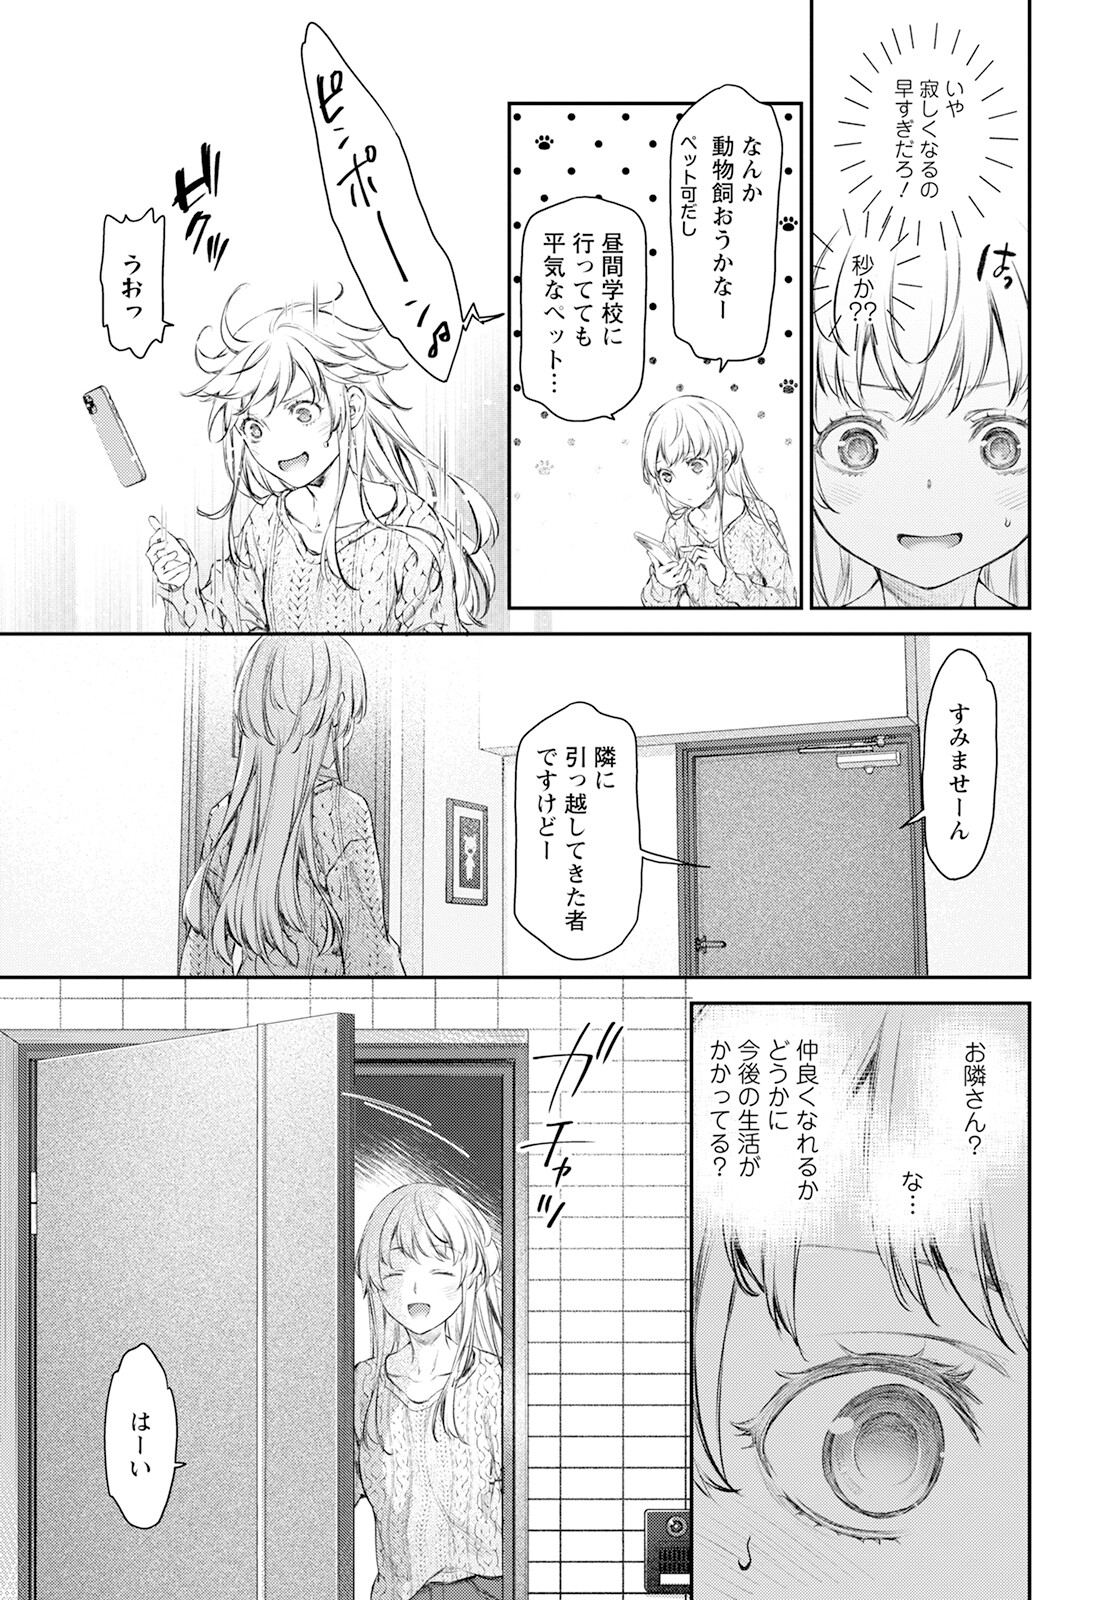 Uchi no Maid ga Uzasugiru! - Chapter 58 - Page 29